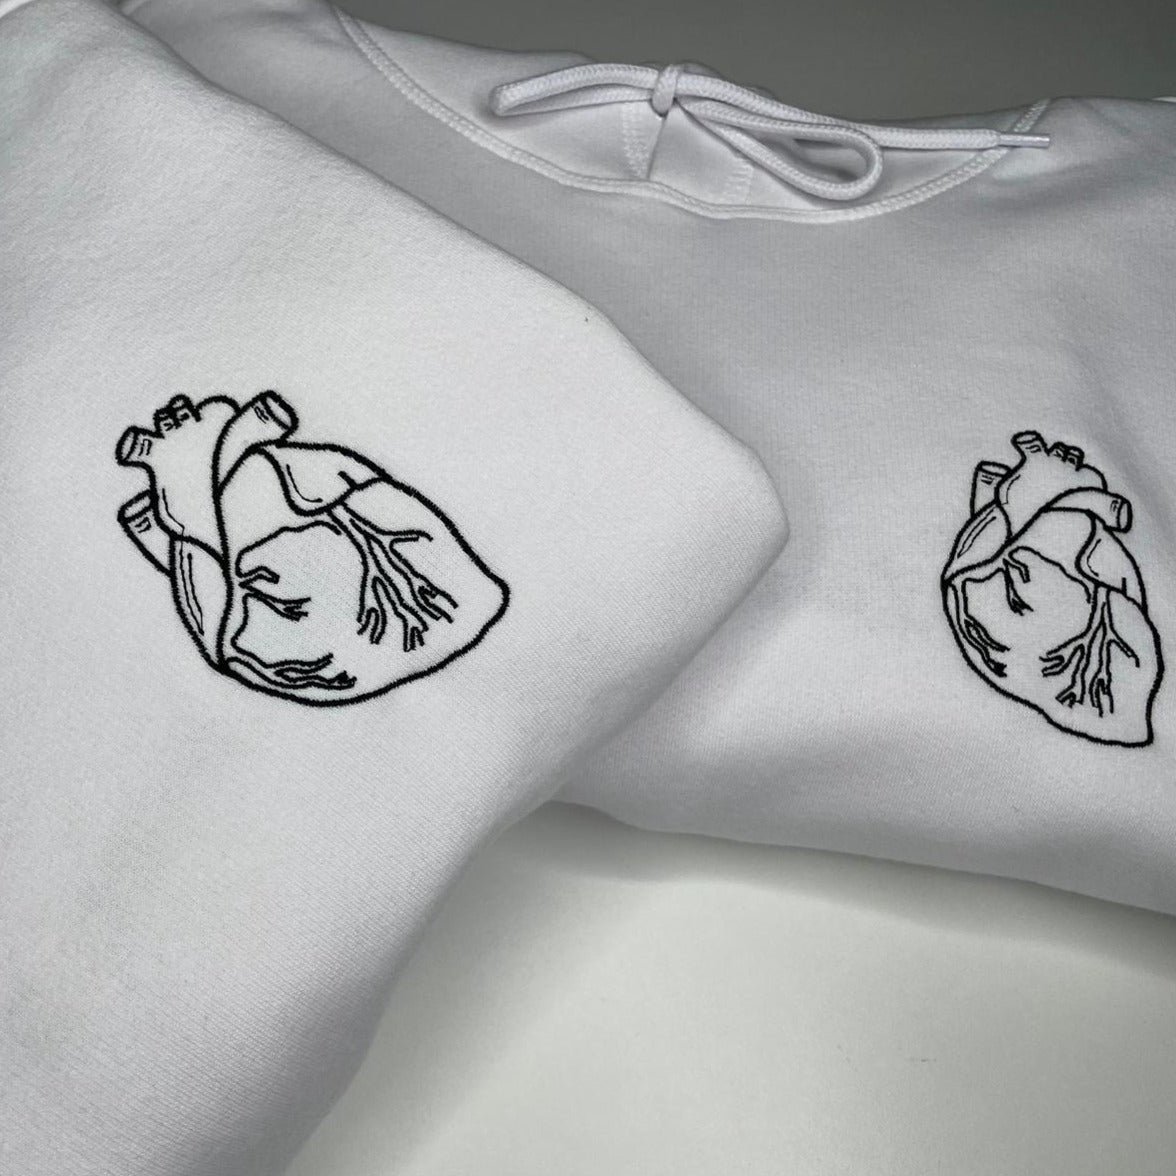 Sweater "DILARA" with anatomic heart